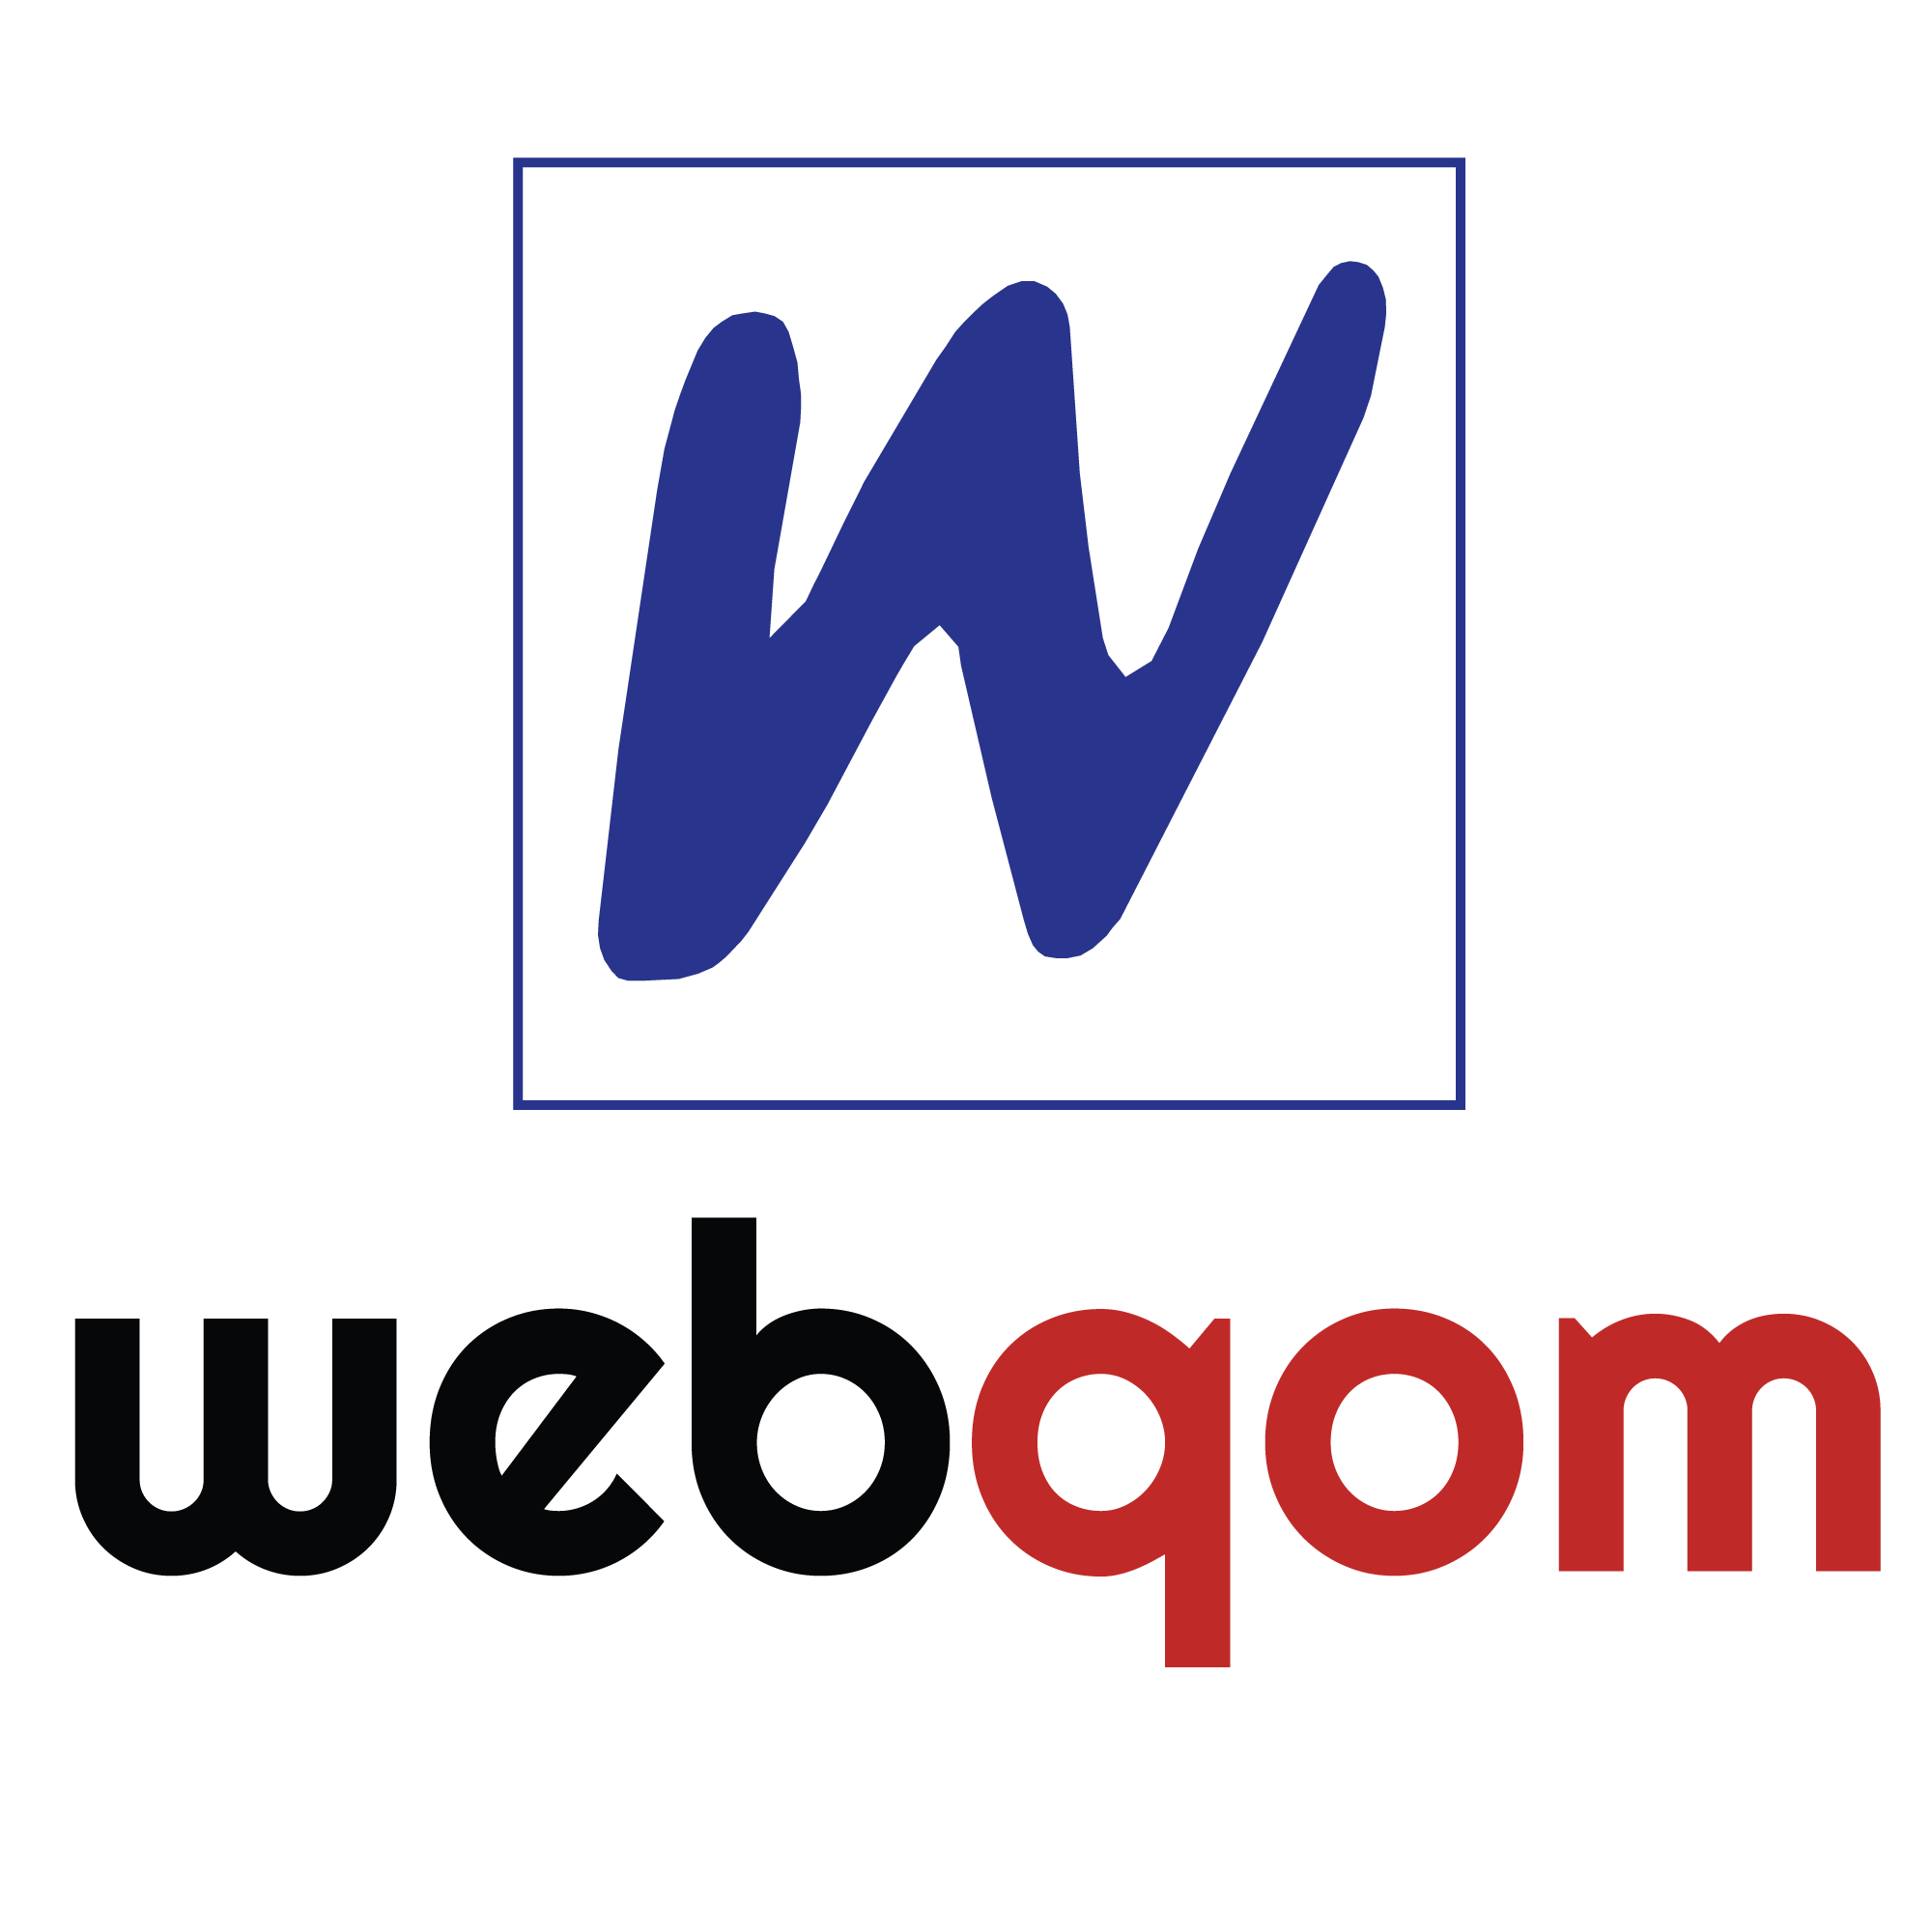 Webqom Technologies Sdn Bhd